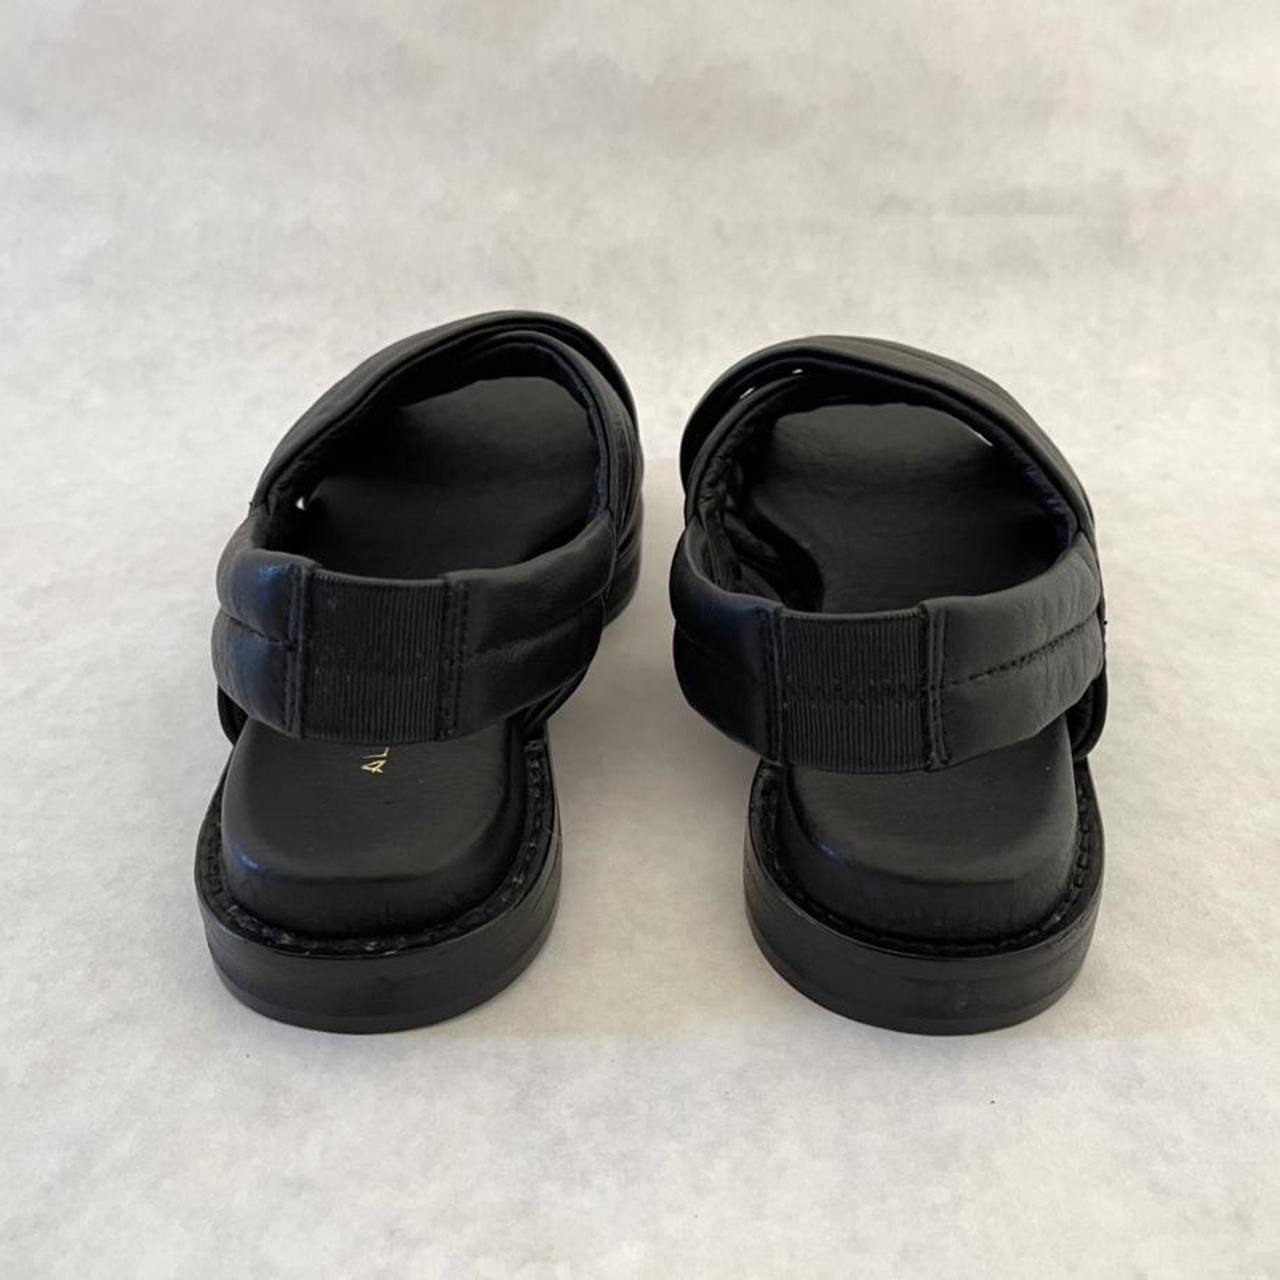 Product Image 4 - ALPHA60 Black leather sandals (Brand